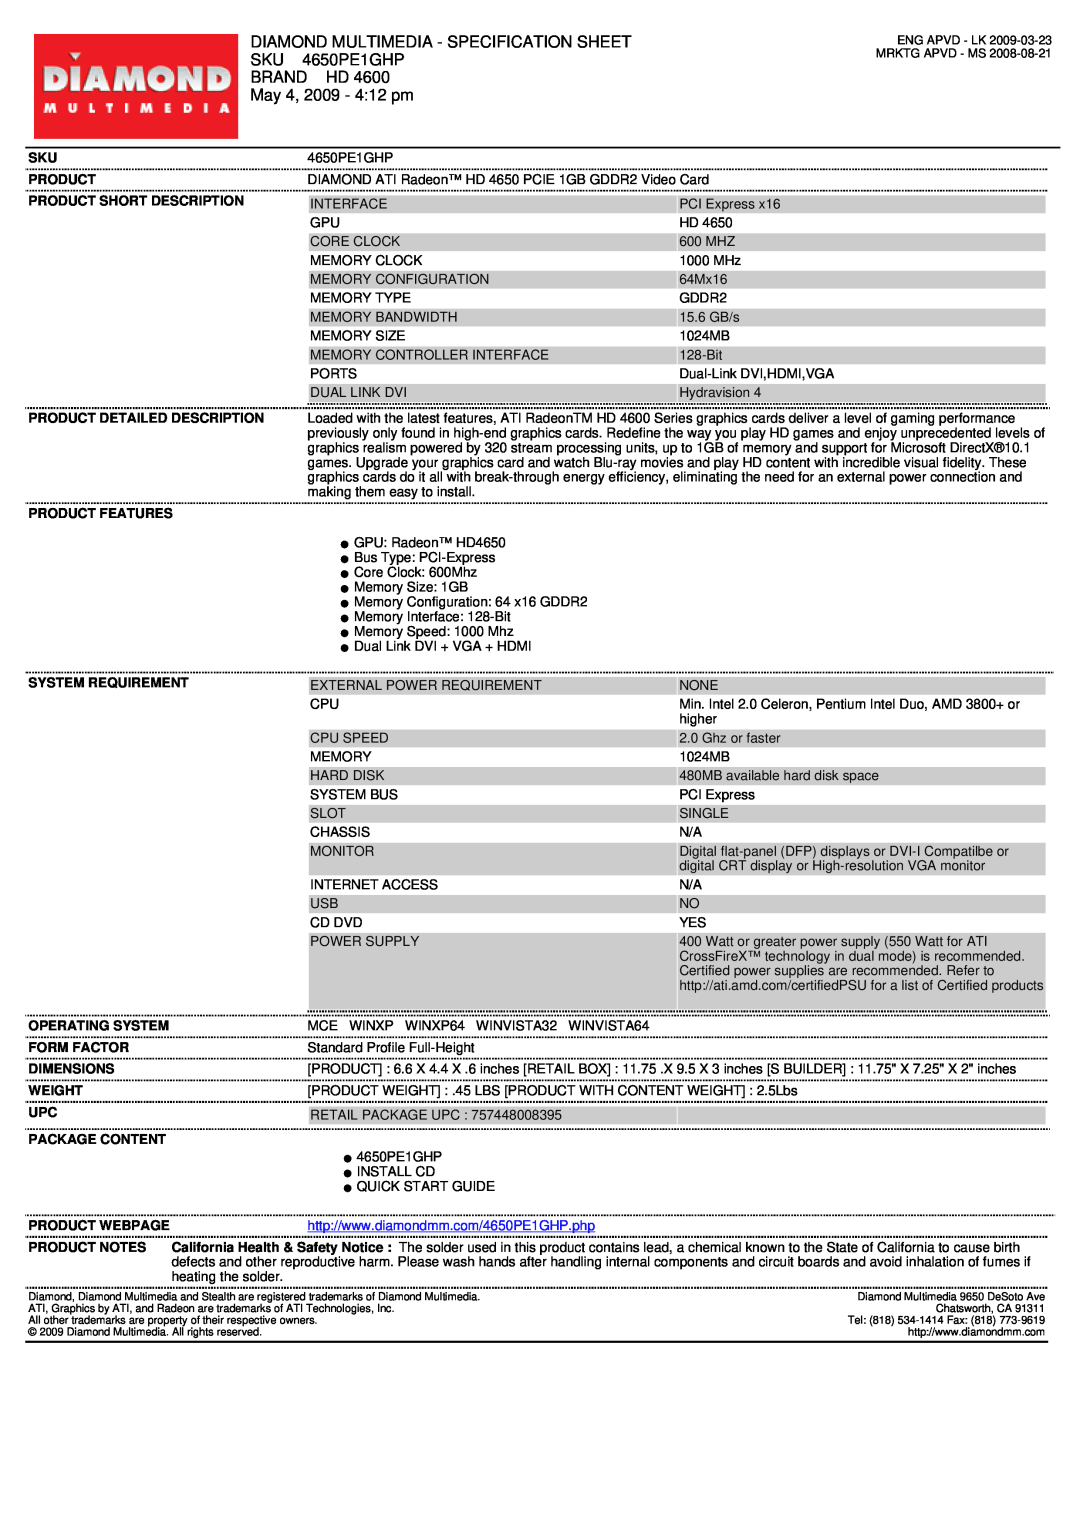 Diamond Multimedia 4650PE1GHP specifications Diamond Multimedia - Specification Sheet, Brand Hd, May 4, 2009 - 412 pm 